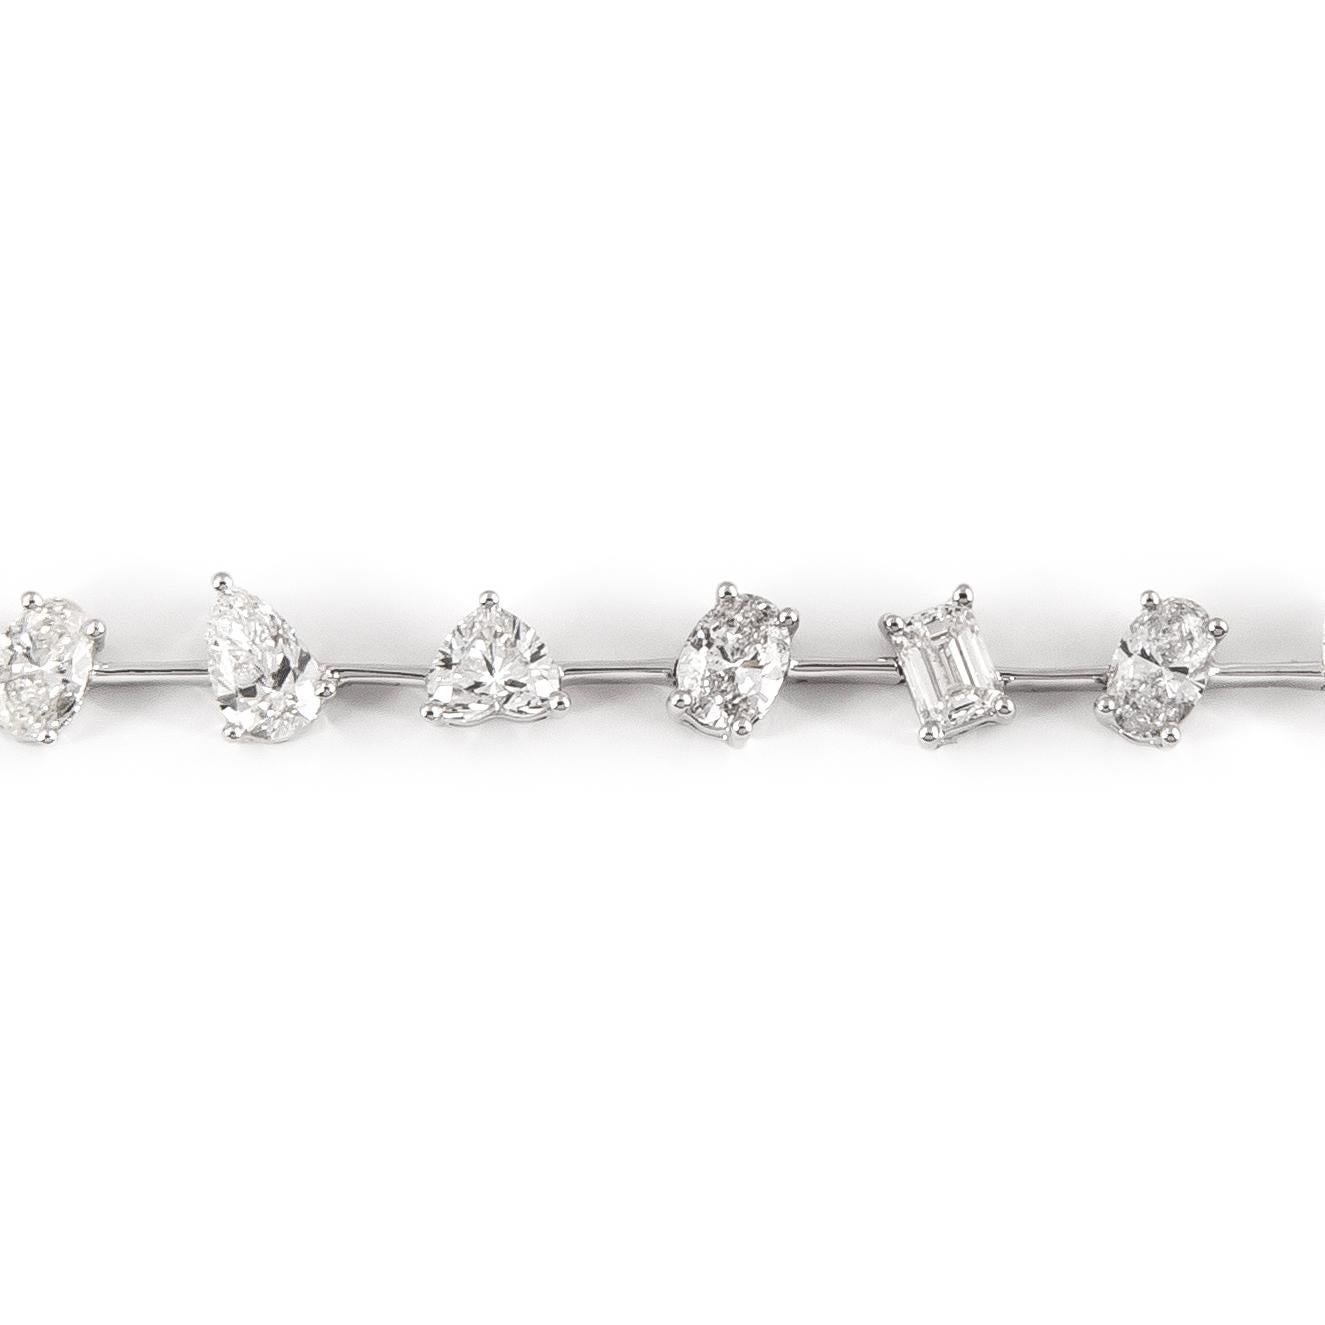 Taille ovale Alexander Bracelet multi-diamants 5,21 carats en or blanc 18 carats en vente